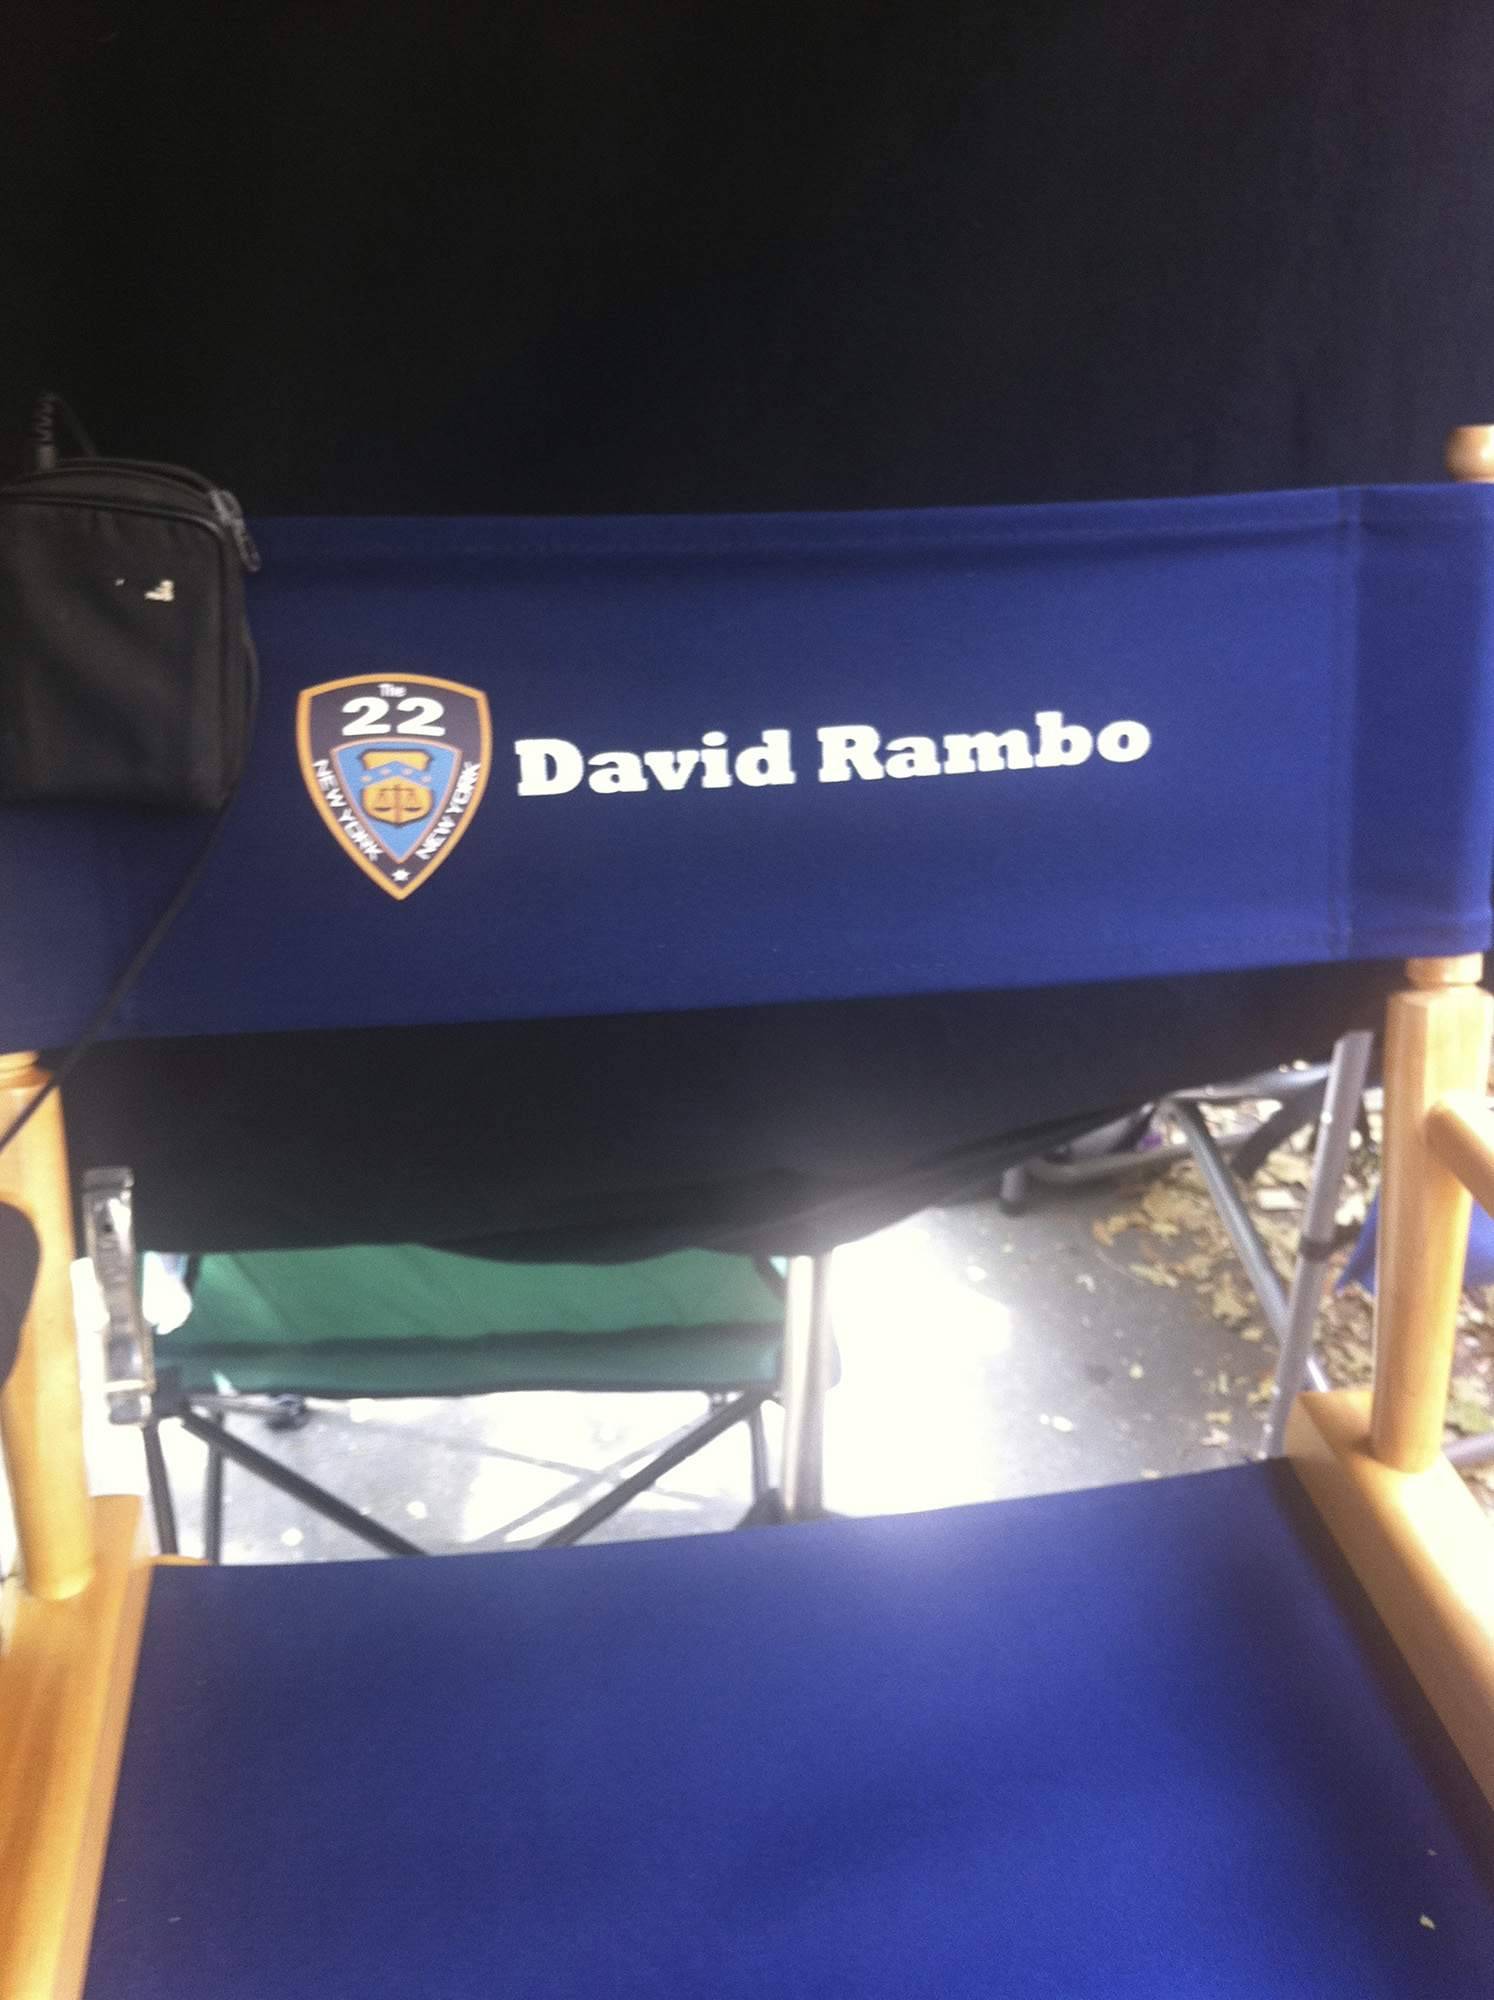 David Rambo's director’s chair